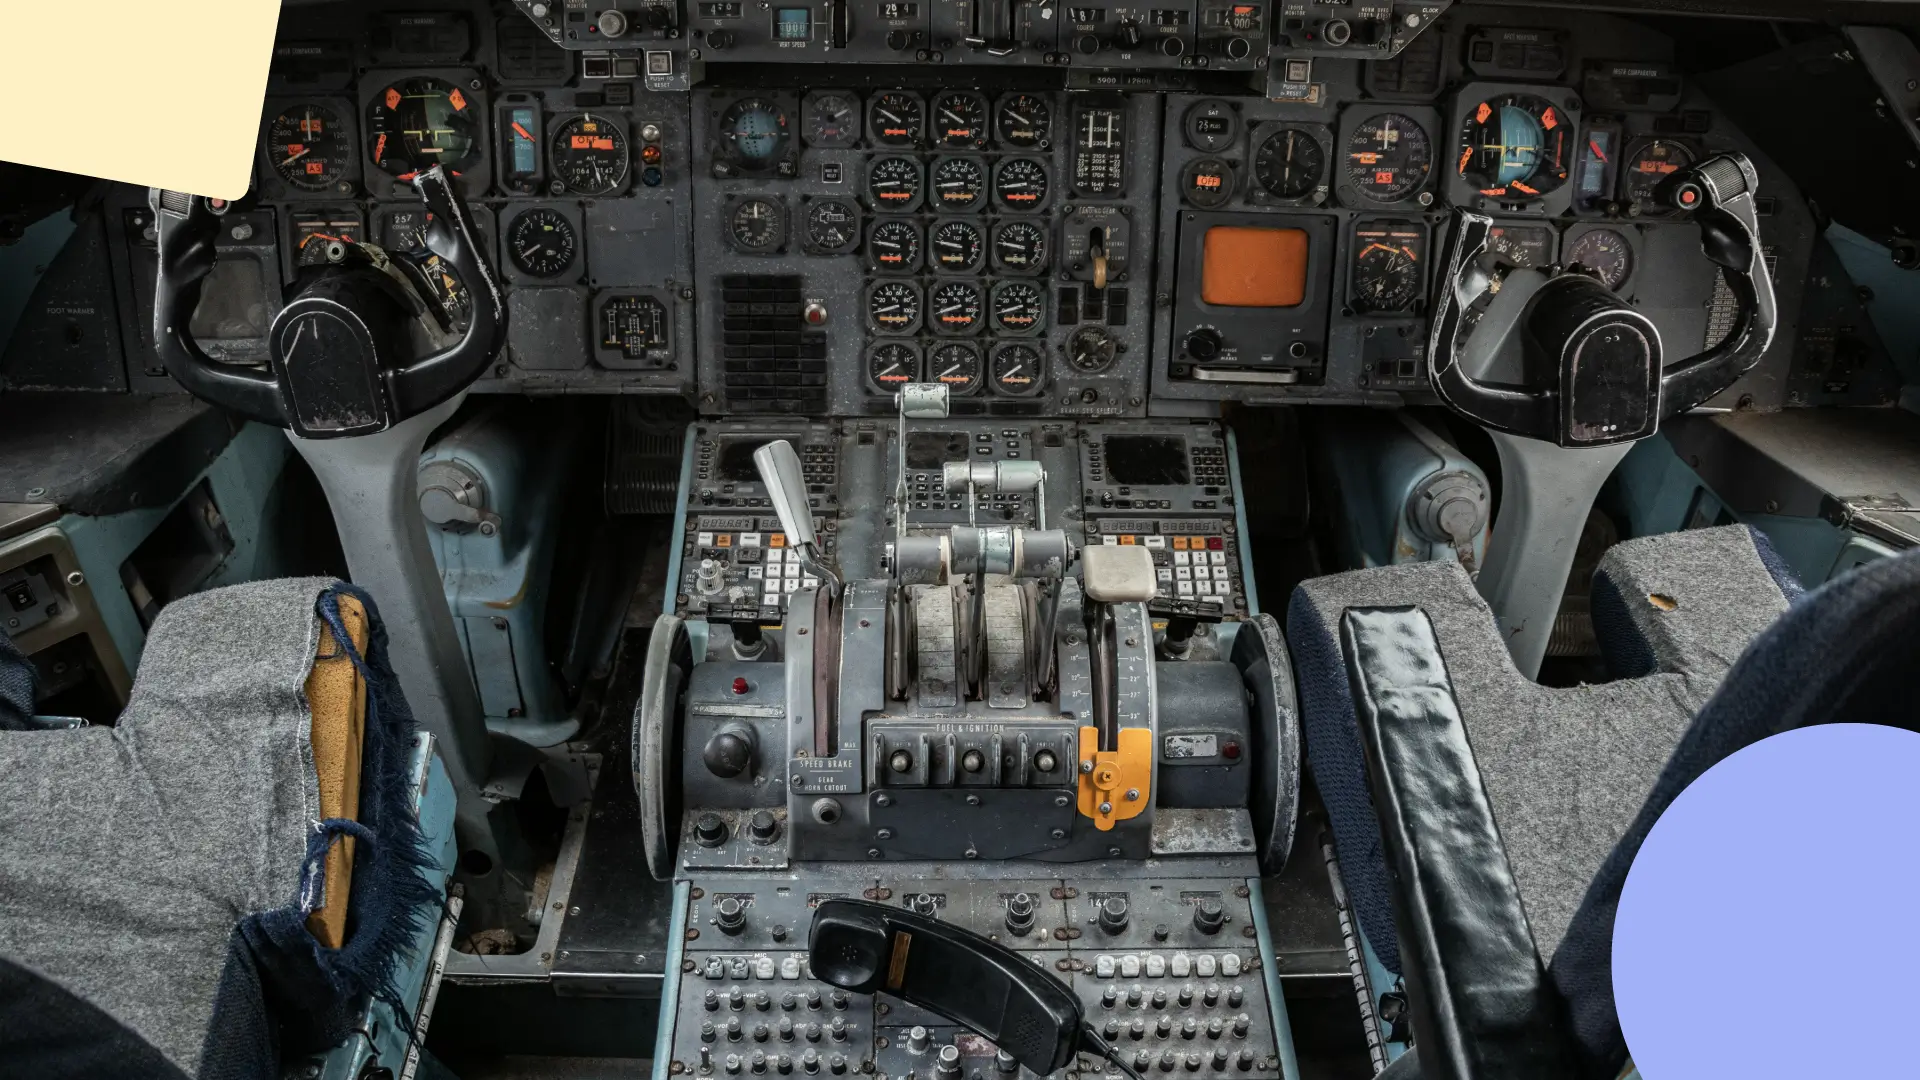 Old fashioned aeroplane cockpit